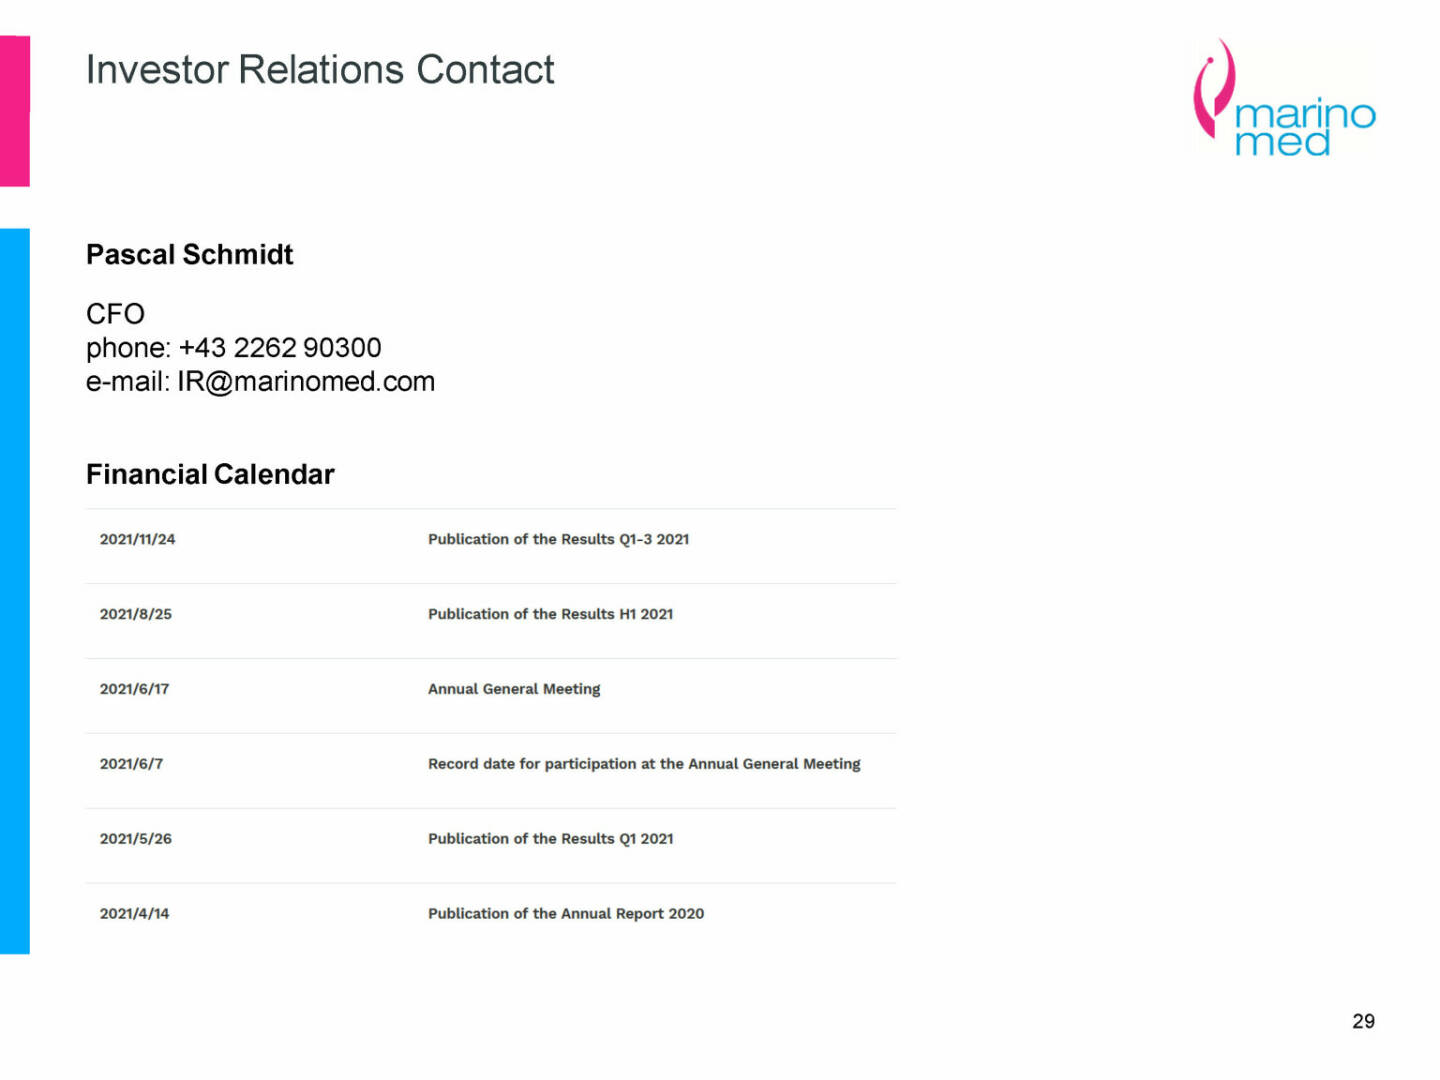 Marinomed - Investor Relations Contact